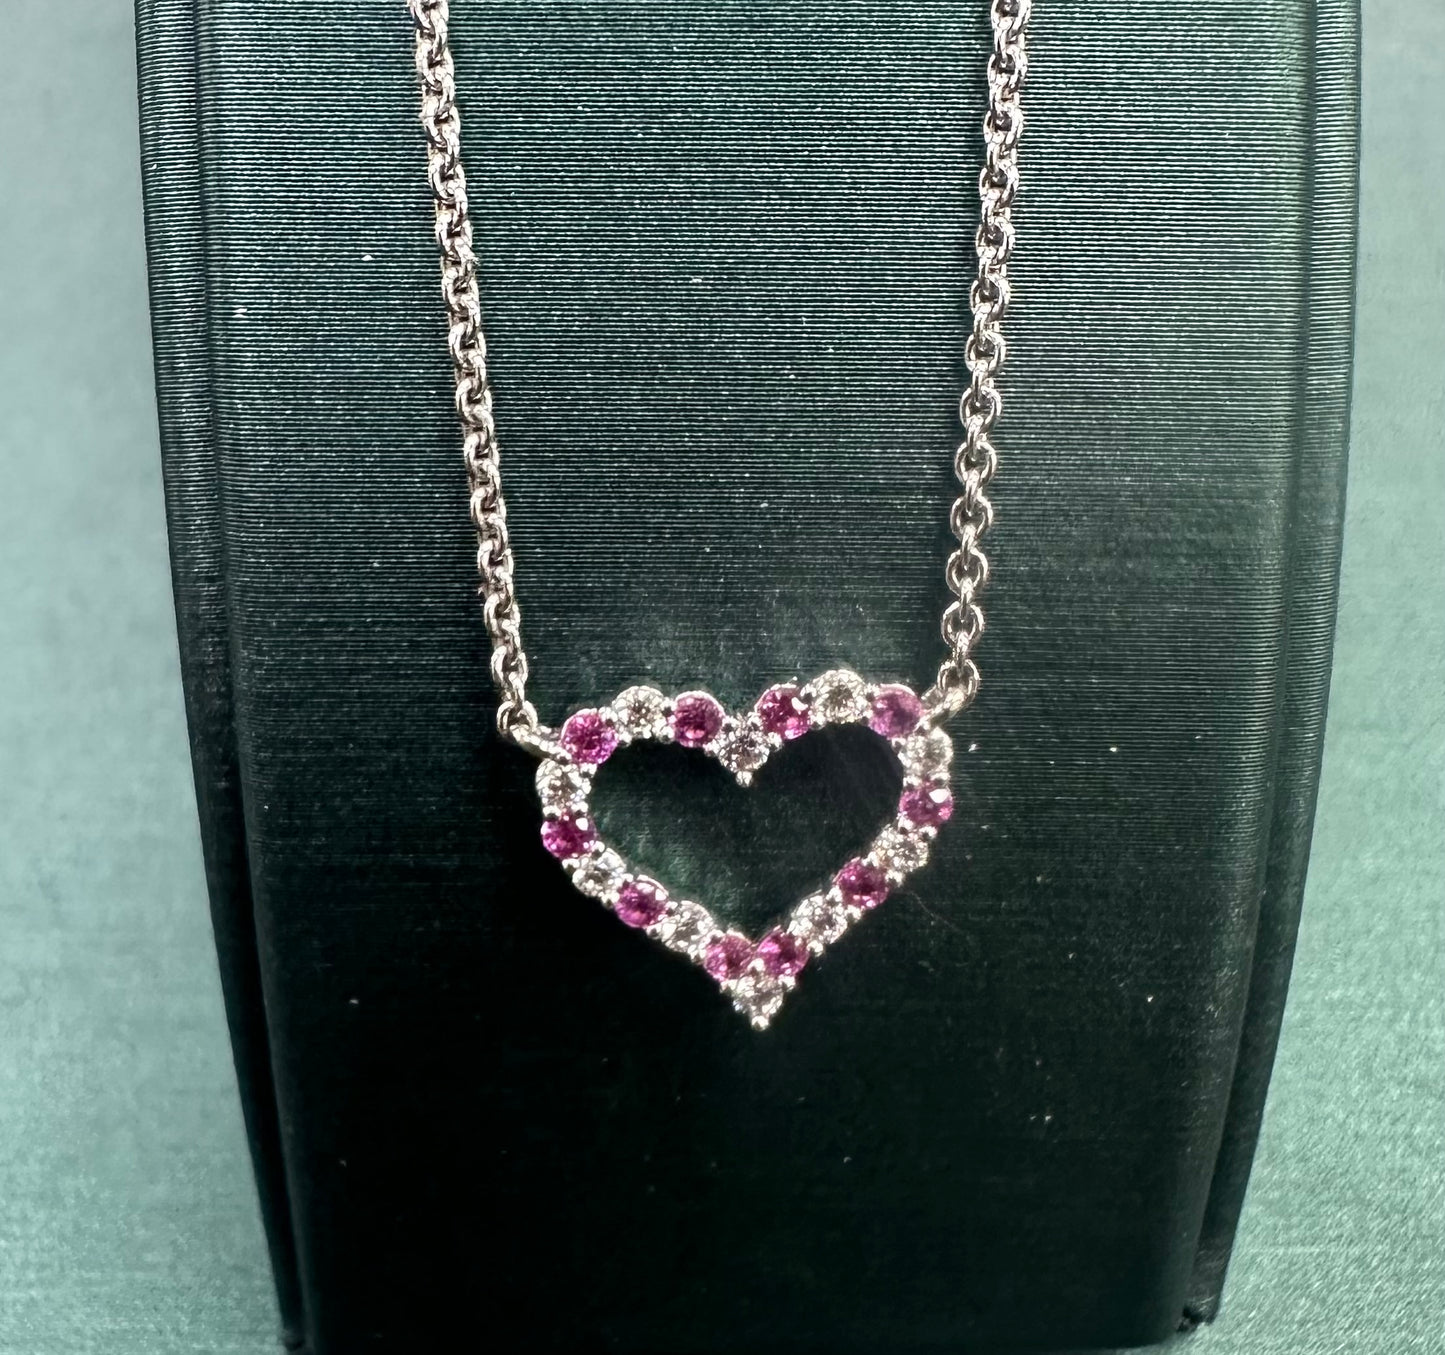 Polka dot sapphire and diamond necklace